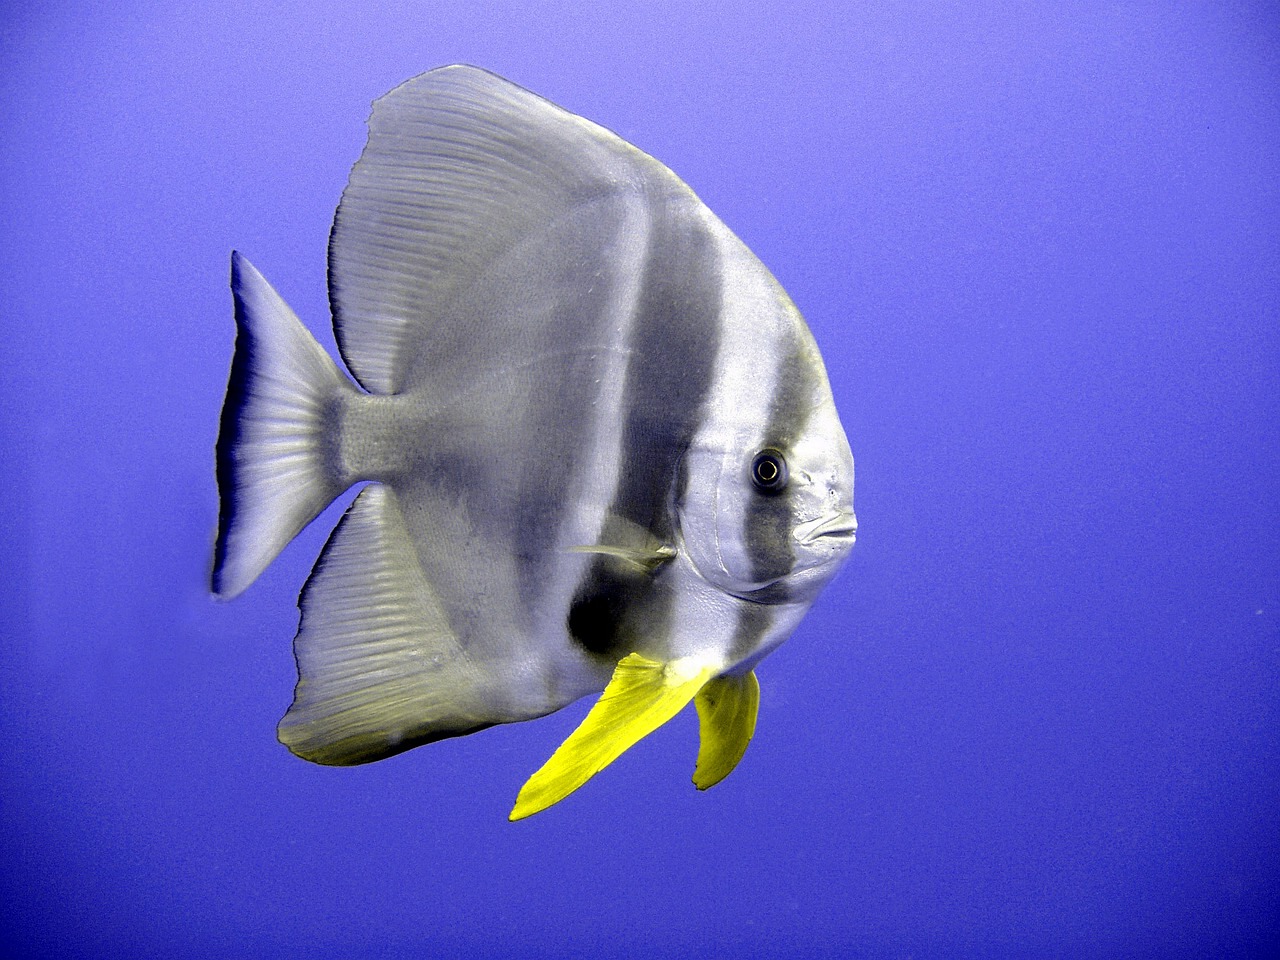 Aquarium vissen - Diverse soorten en maten - alles kan samen